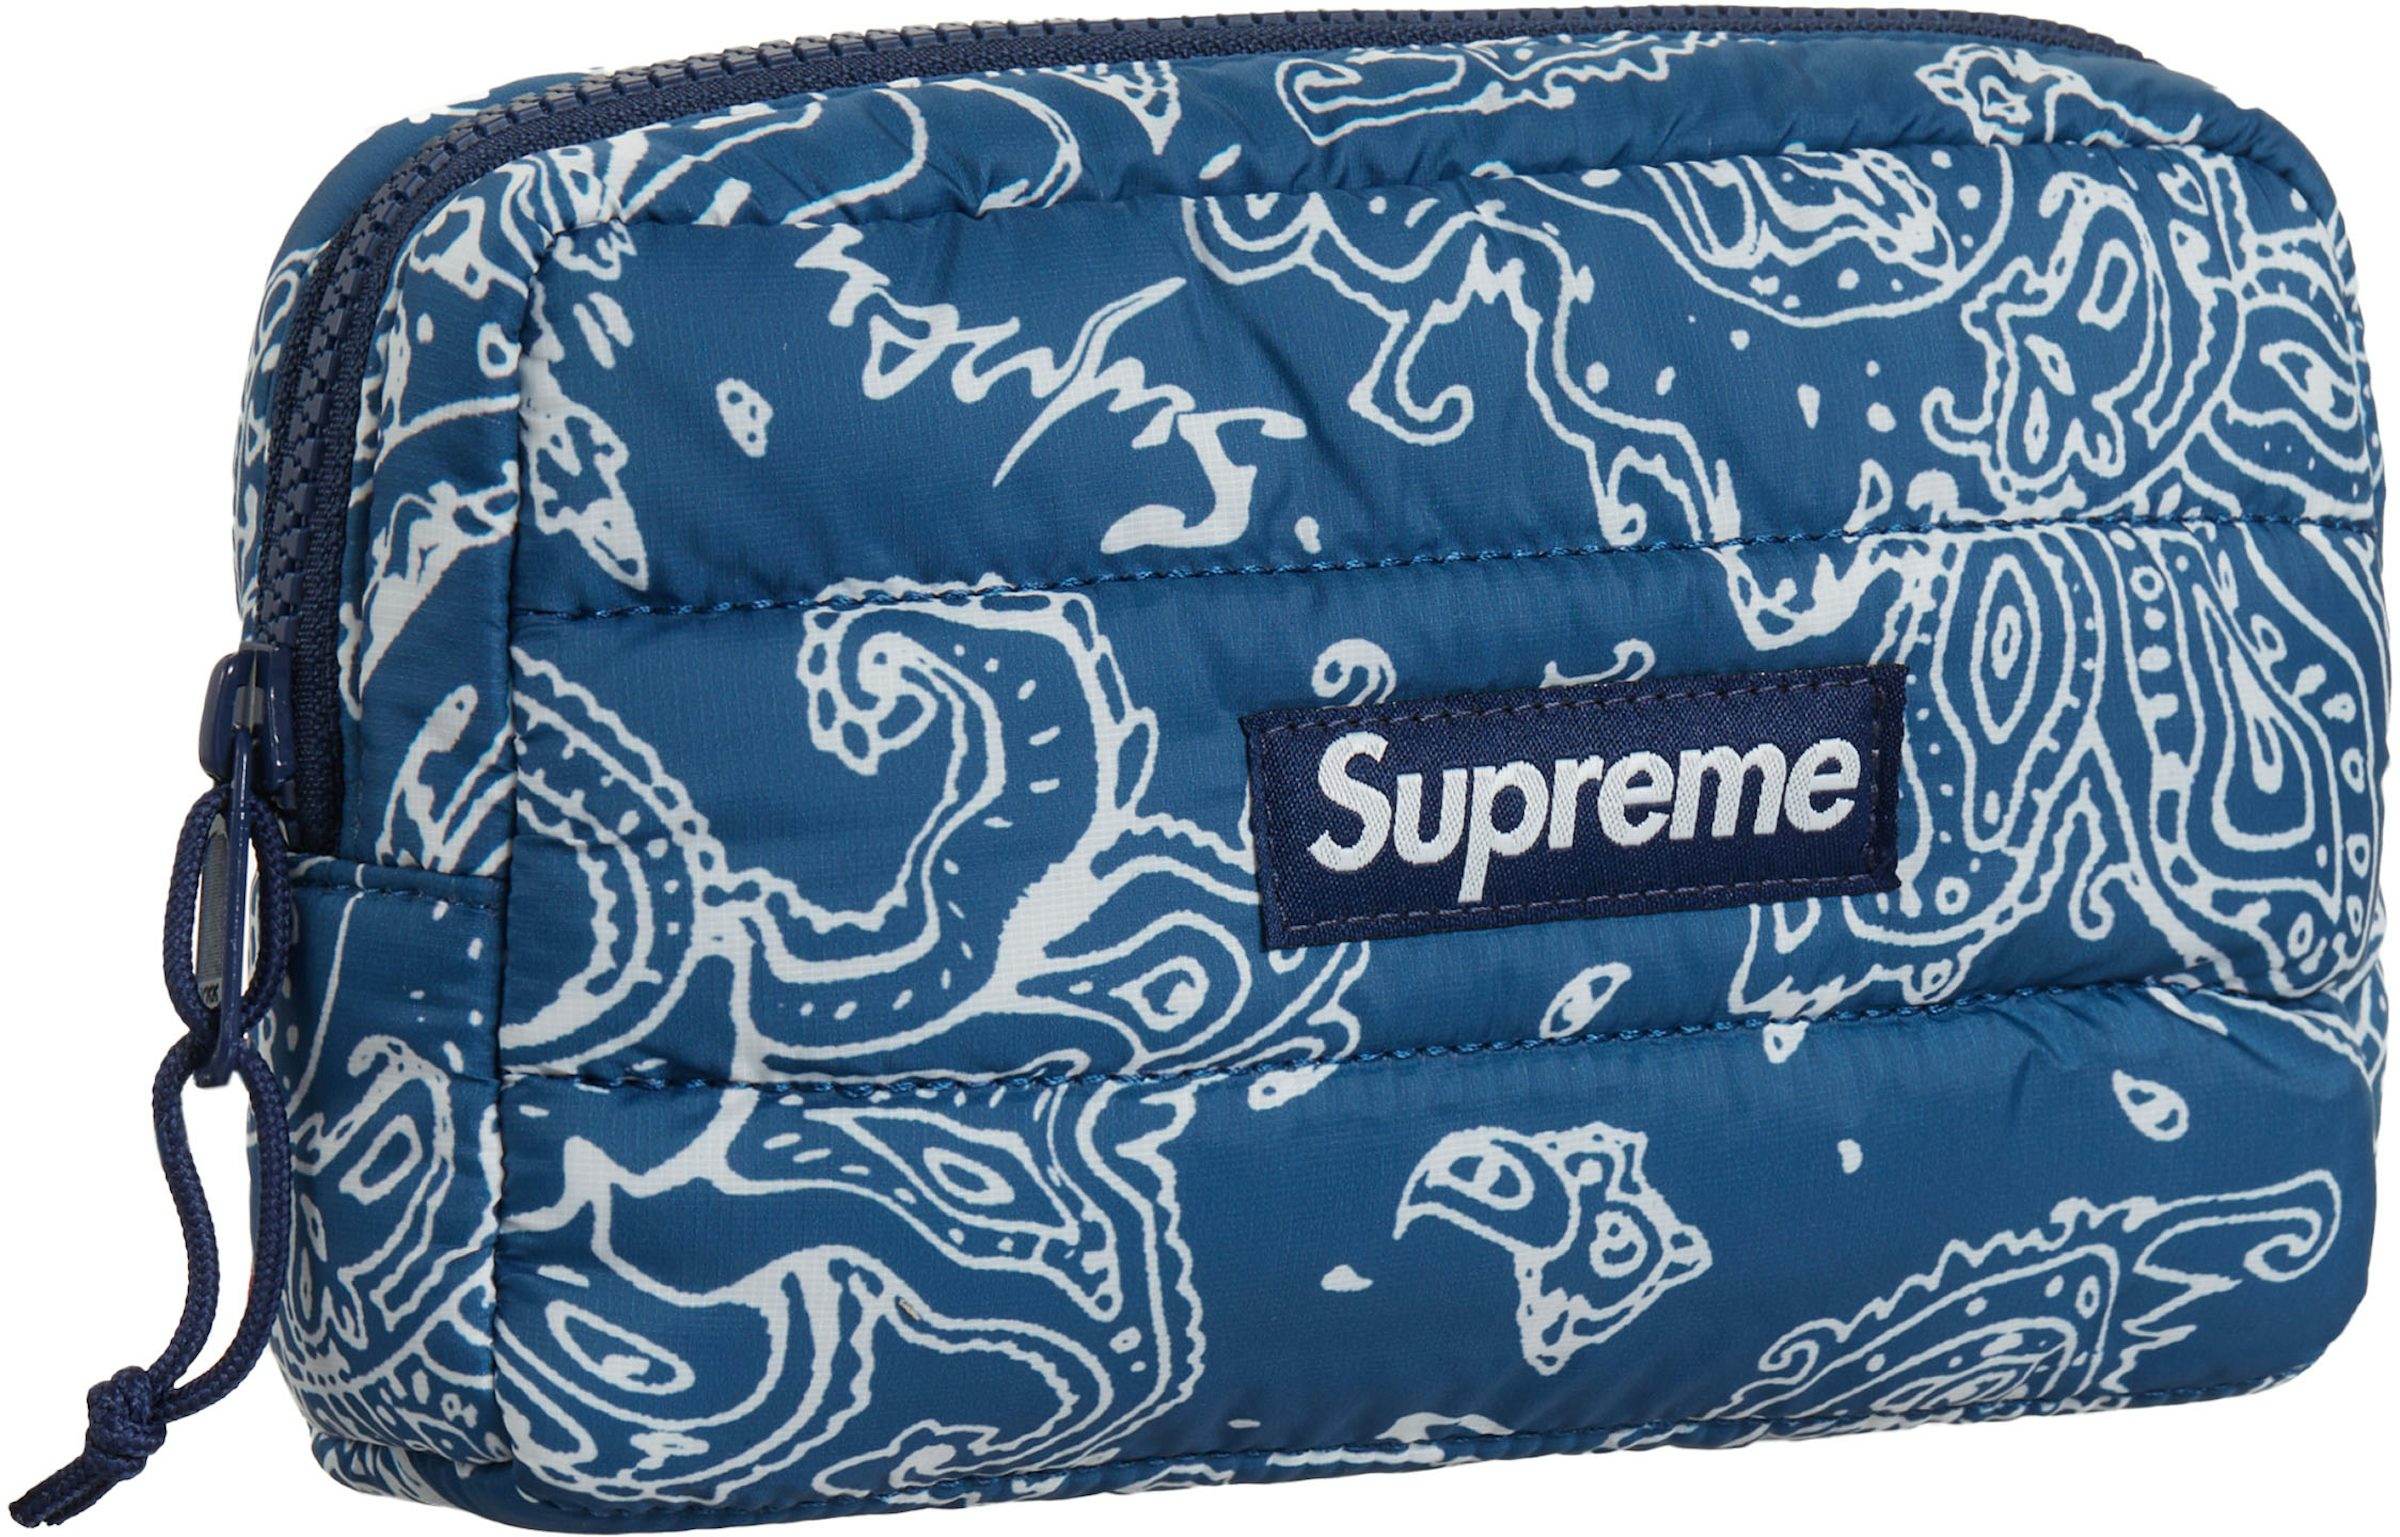 NEWARRIVAL #INSTOCK Supreme Puffer Side Bag Blue Paisley (Unisex